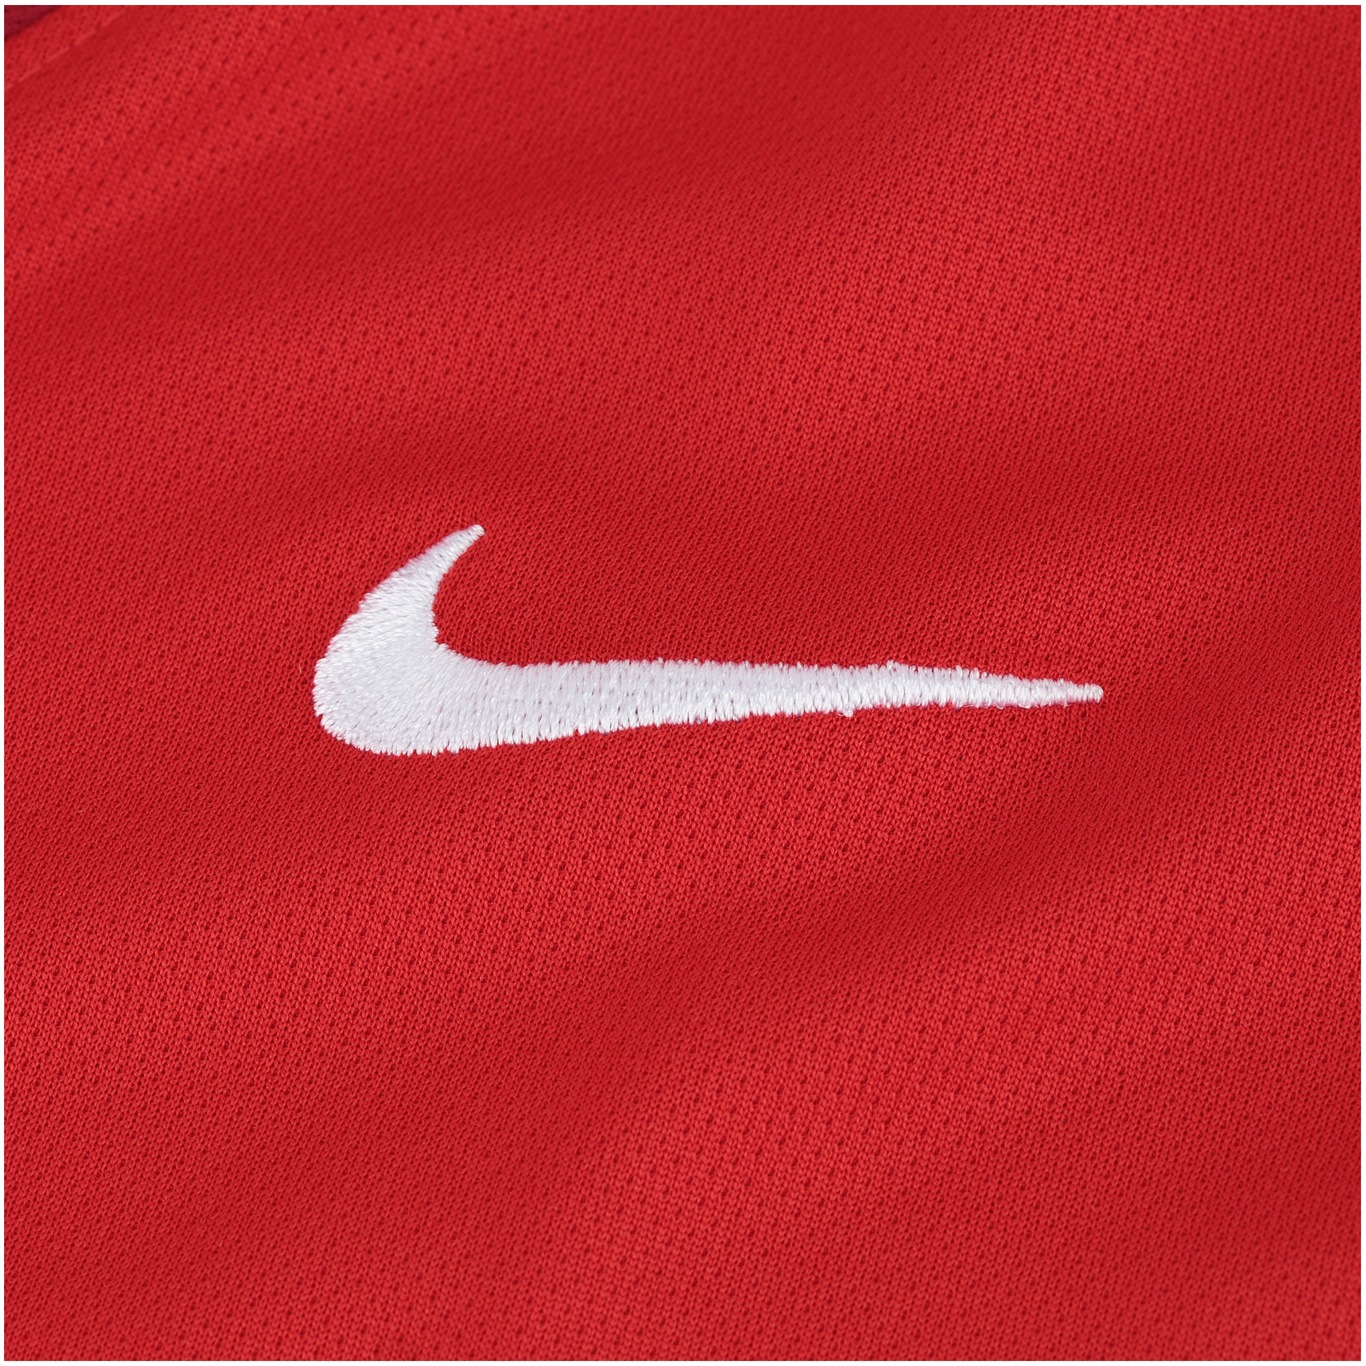 Camiseta Internacional Feminina Nike OF.1 2018 Vermelho